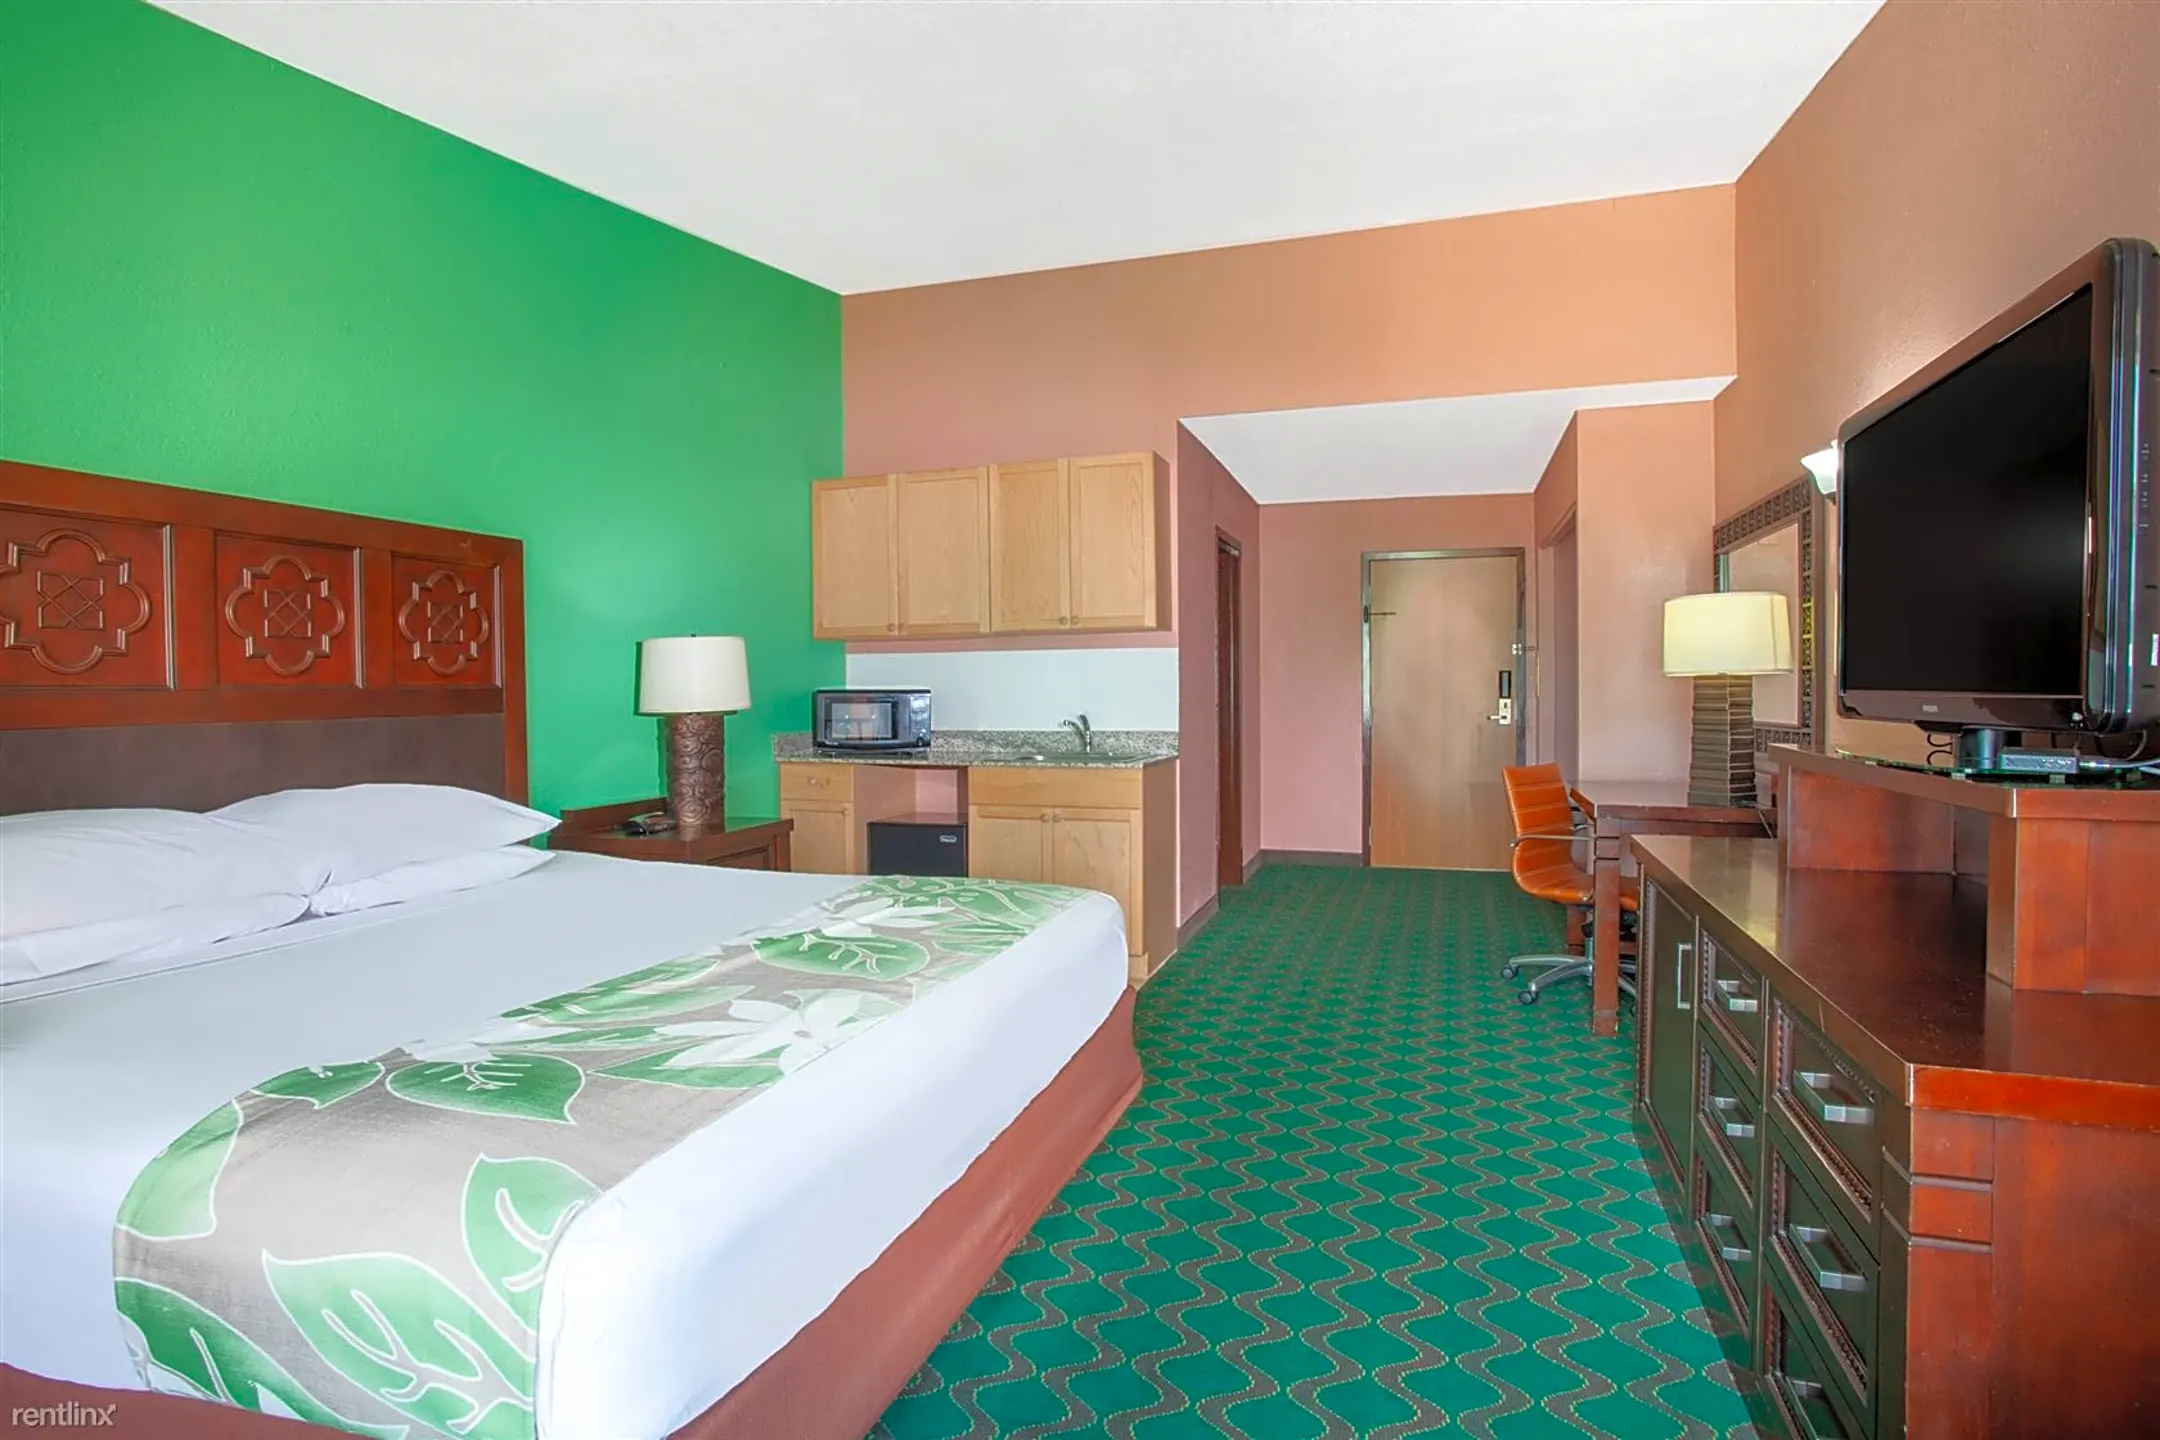 Bedroom - Stayable Suites Kissimmee - Kissimmee, FL